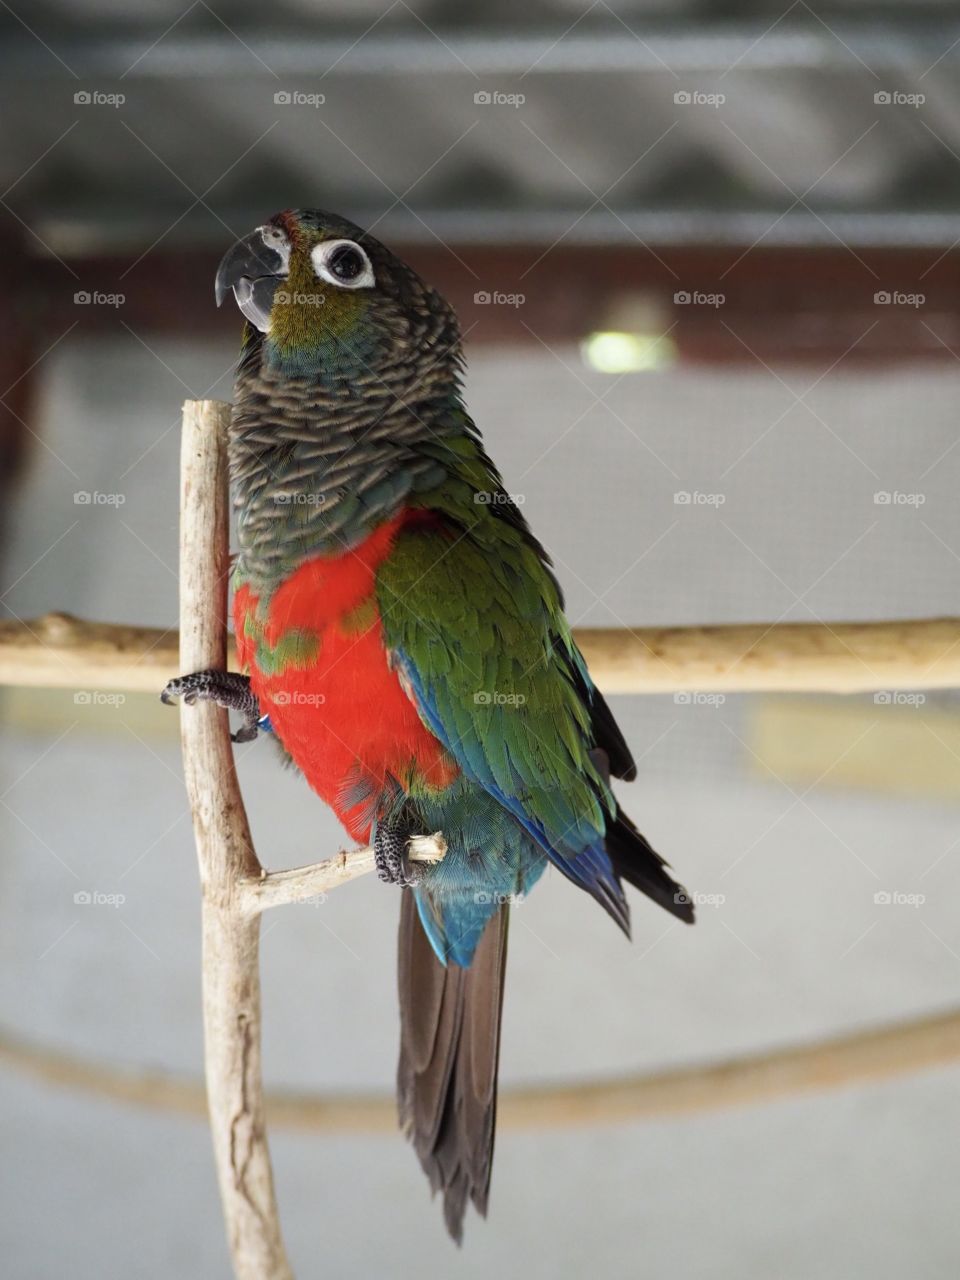 My crimson parrot